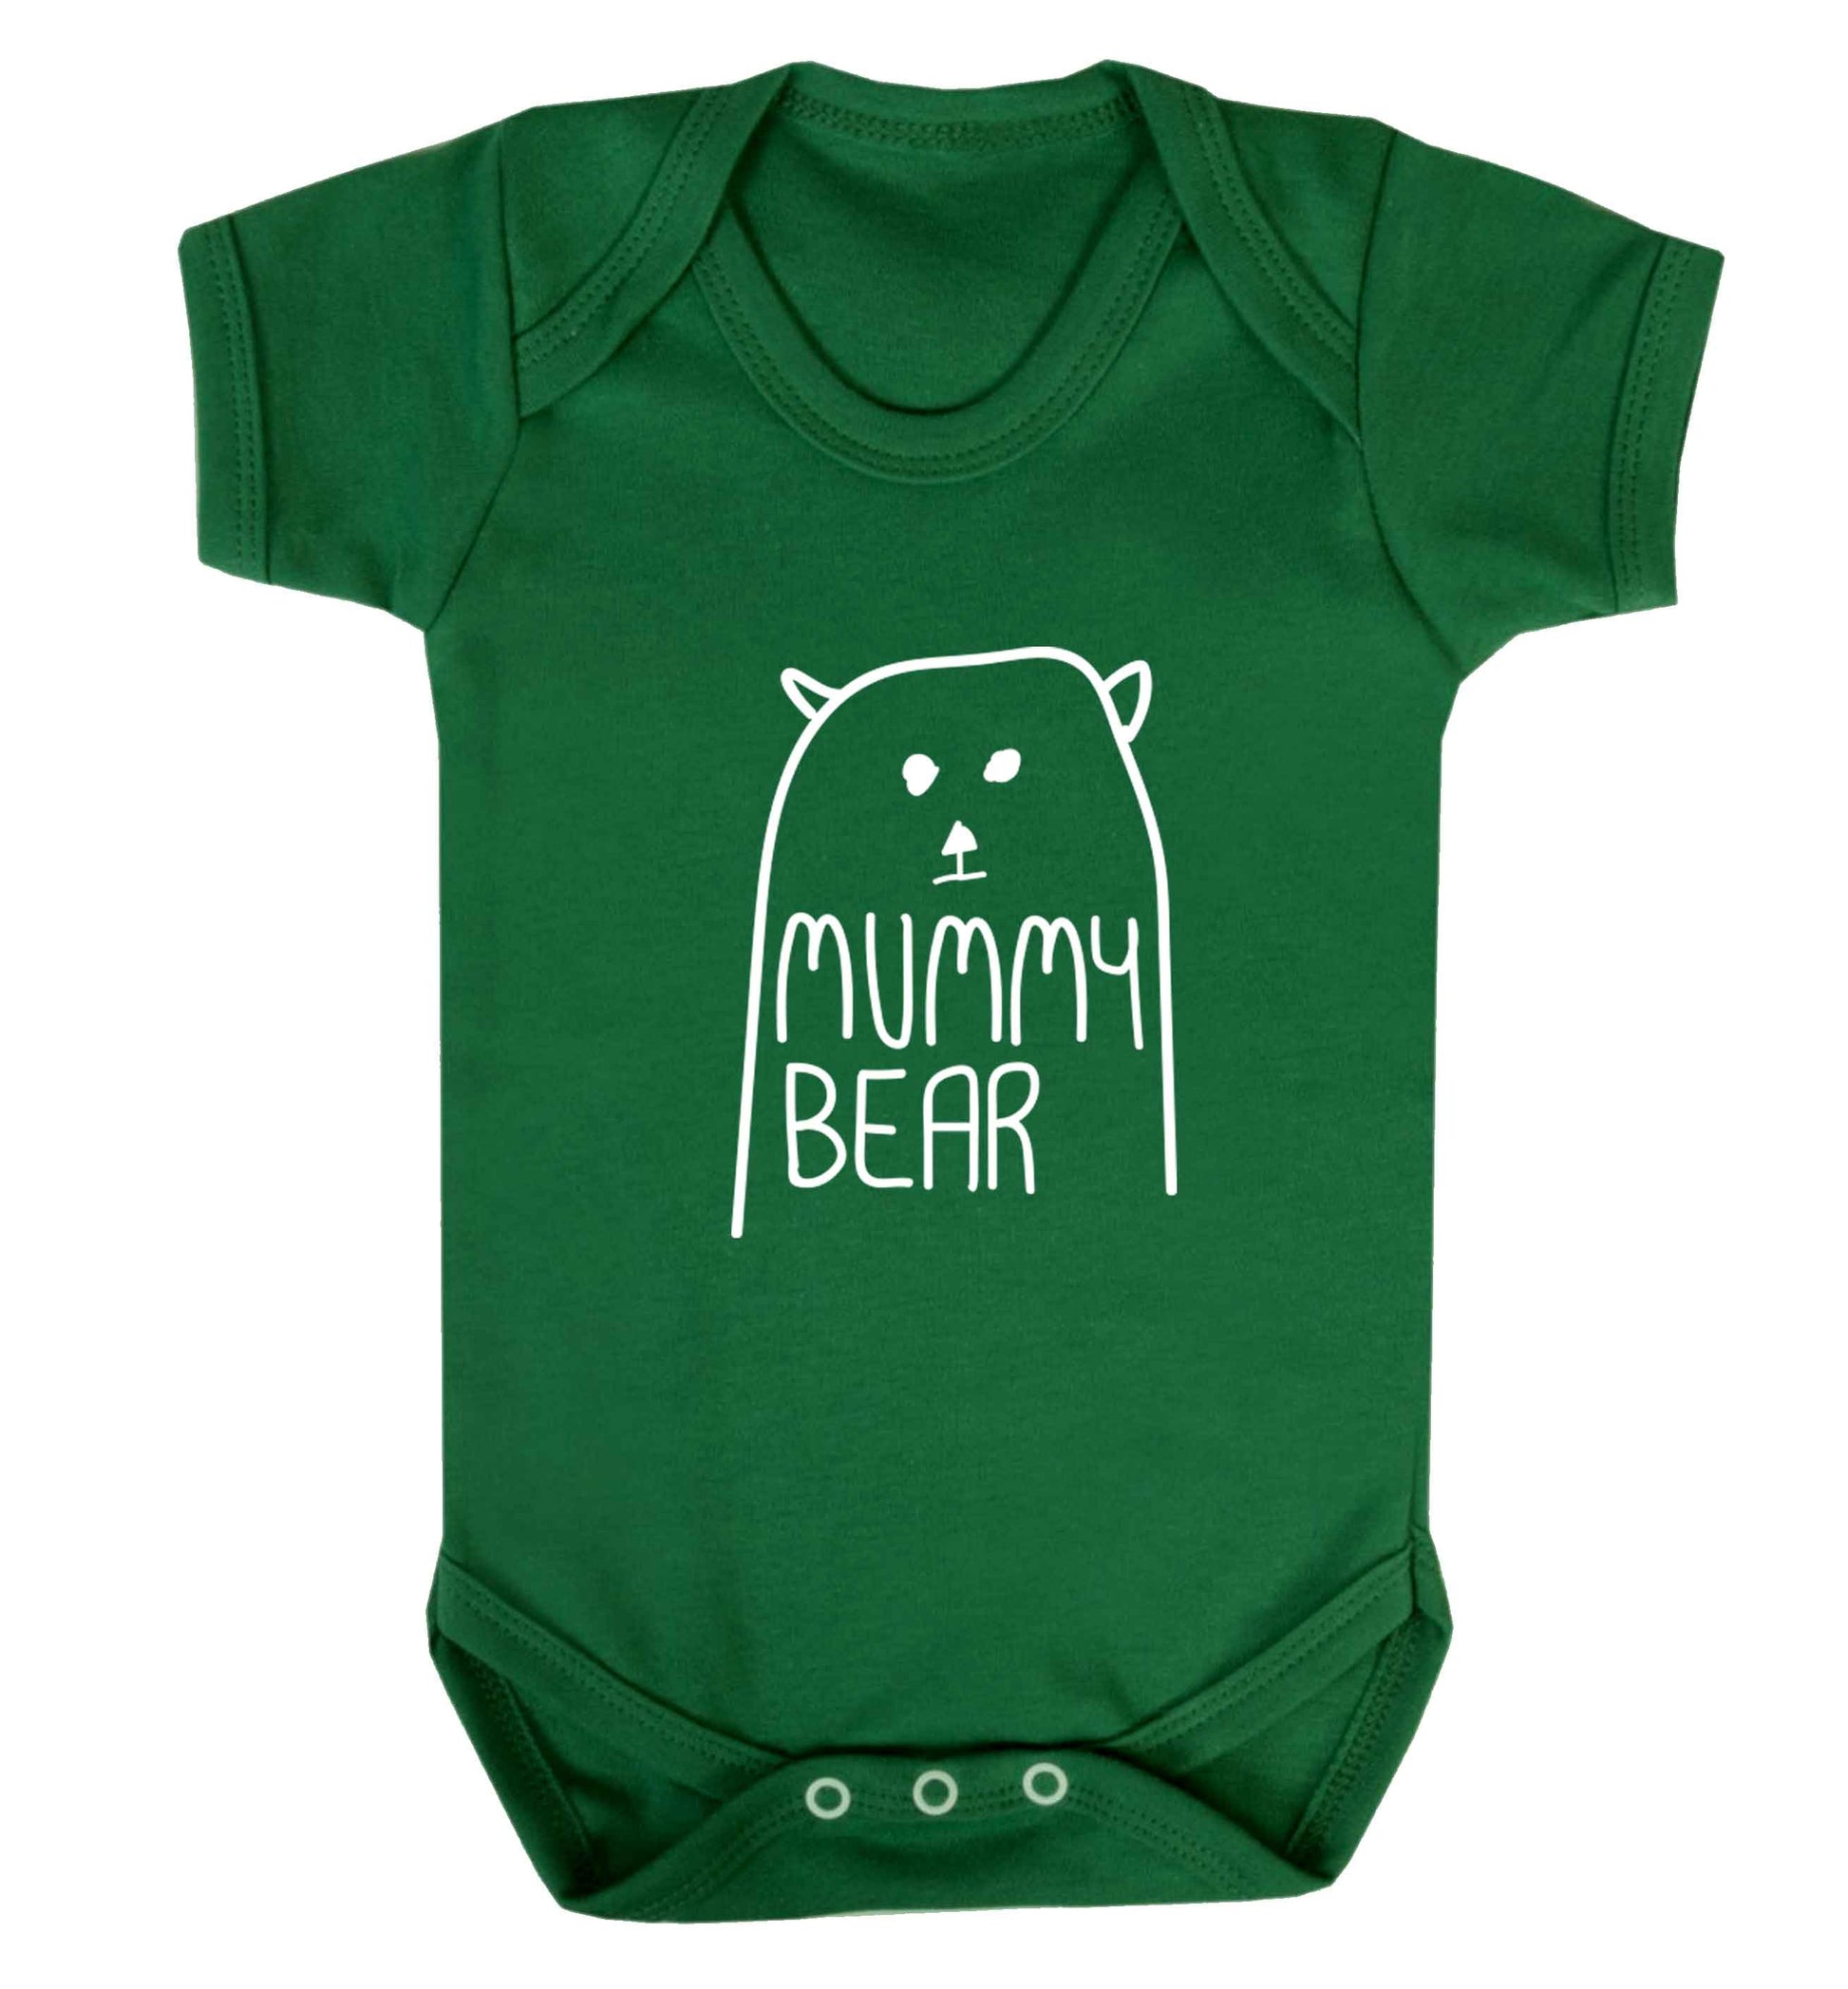 Mummy bear baby vest green 18-24 months